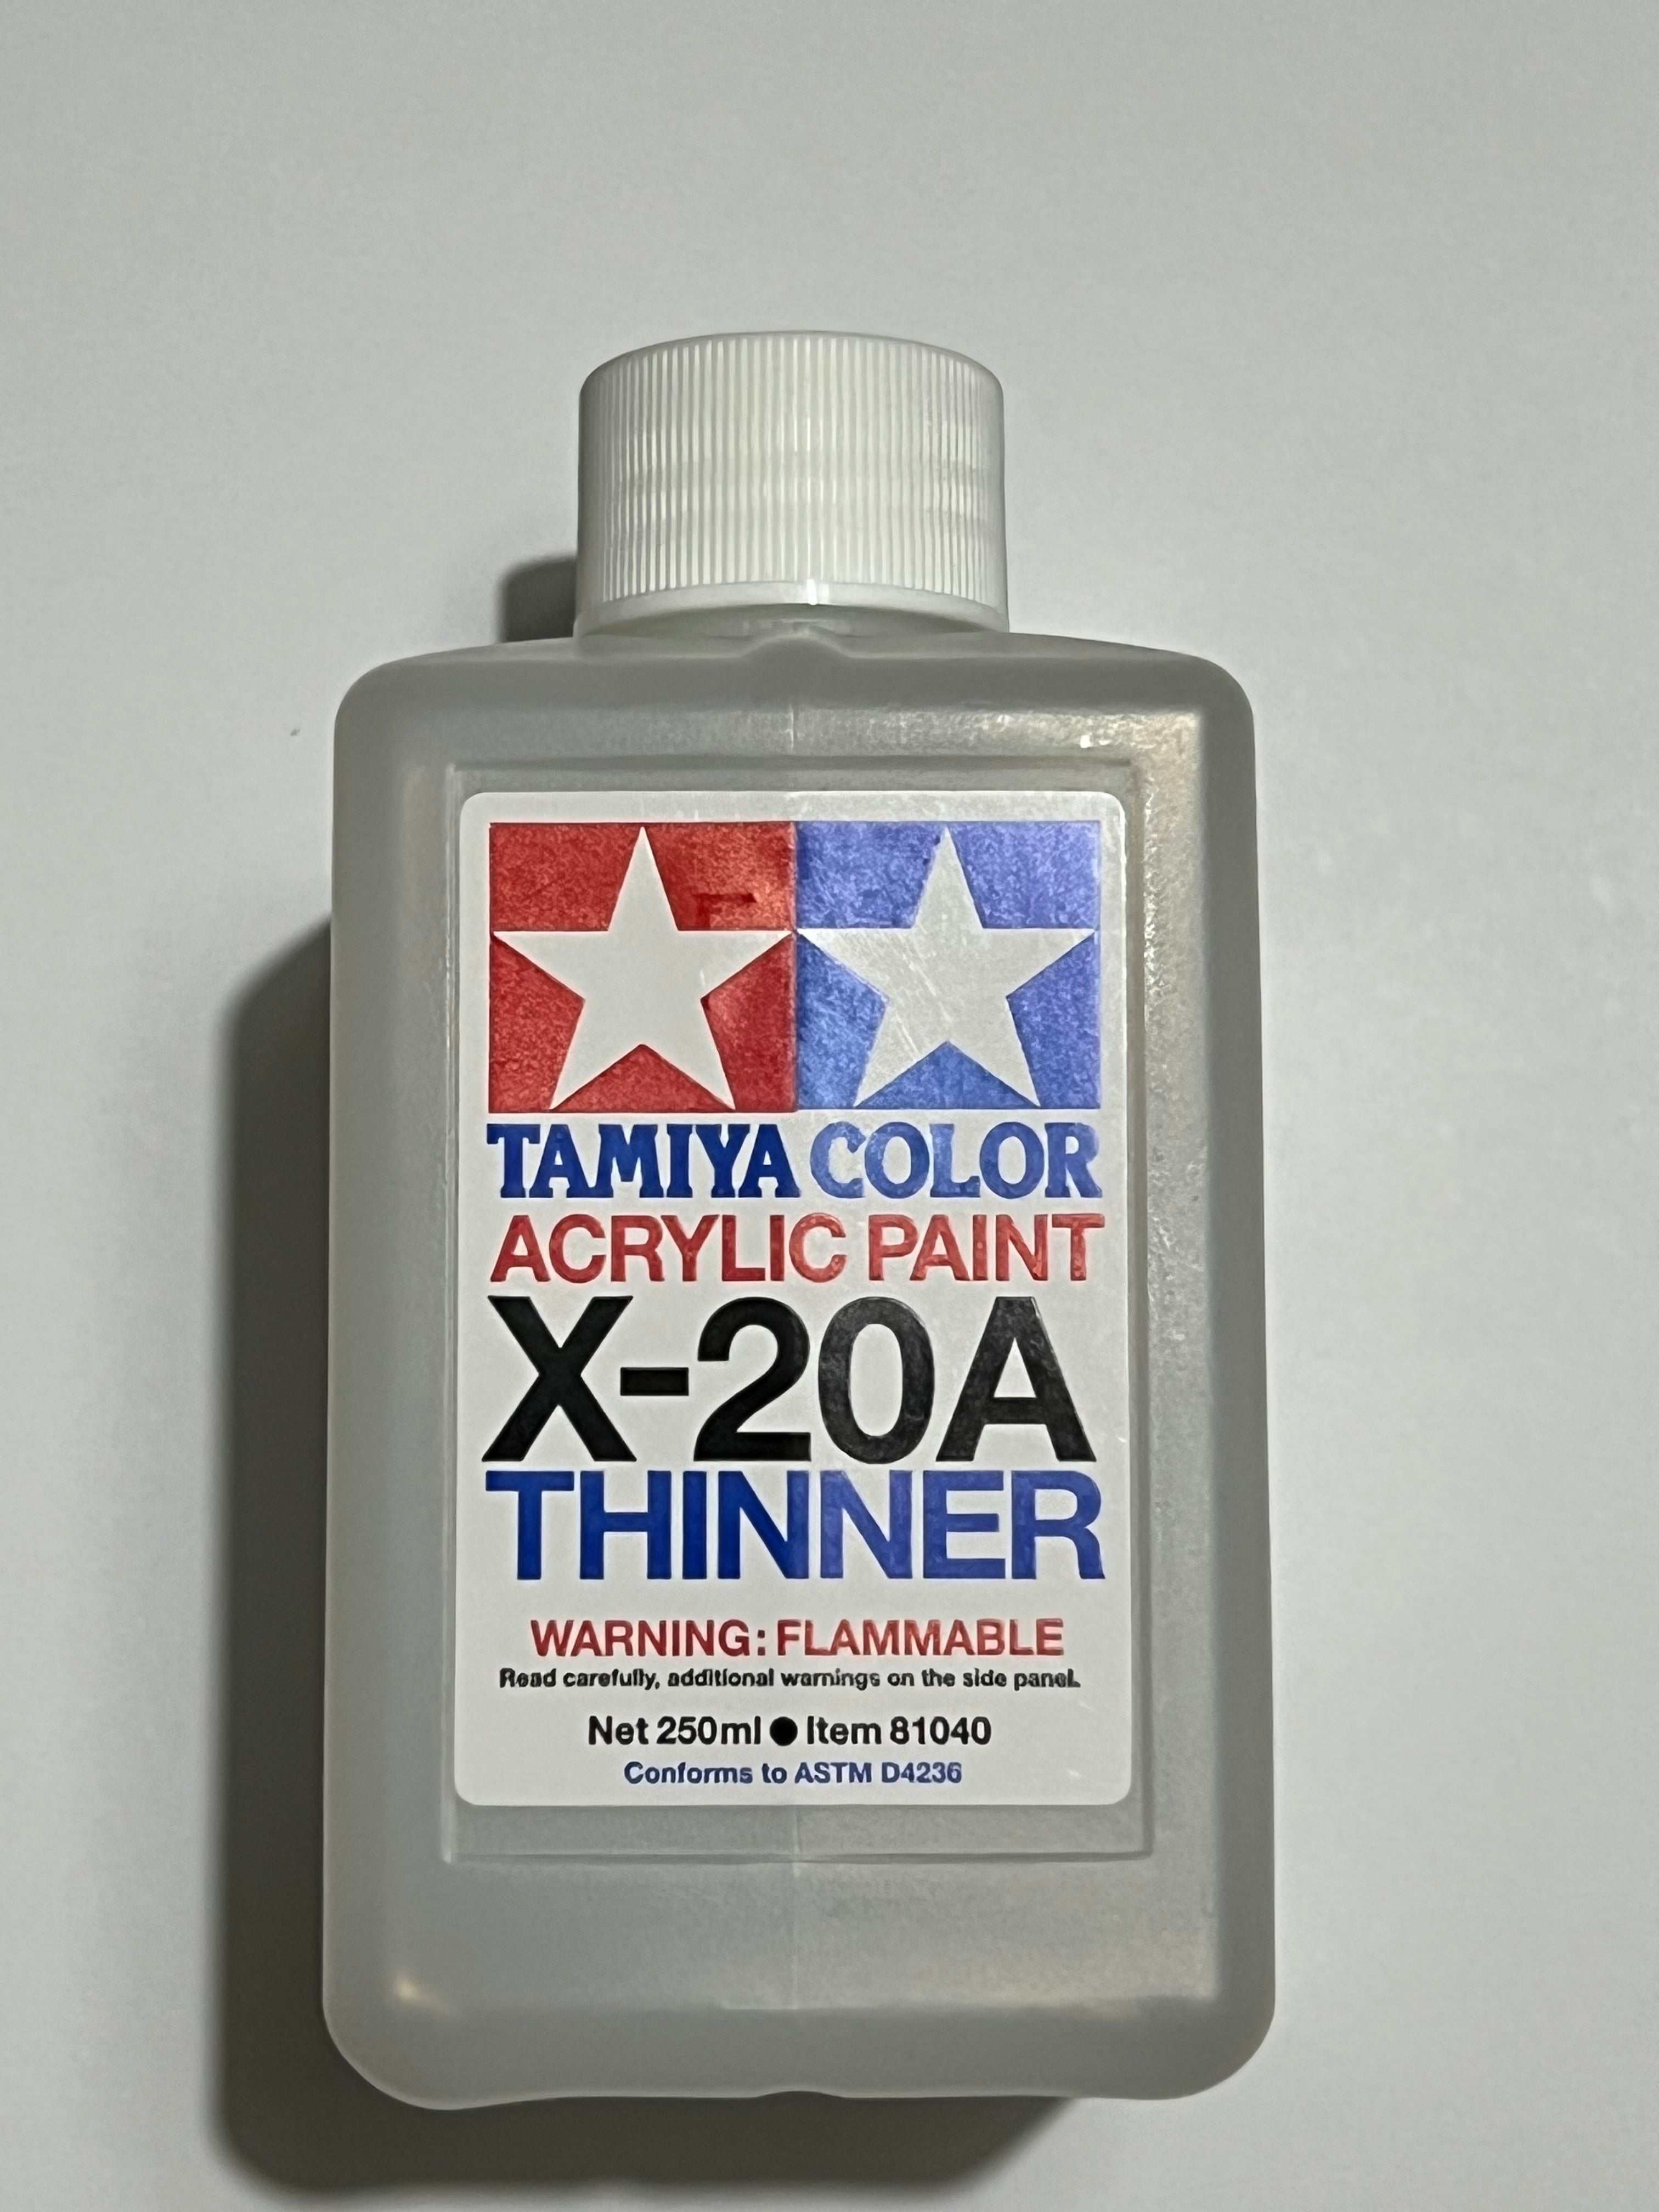 Tamiya Thinner 250Ml X20-A 81040